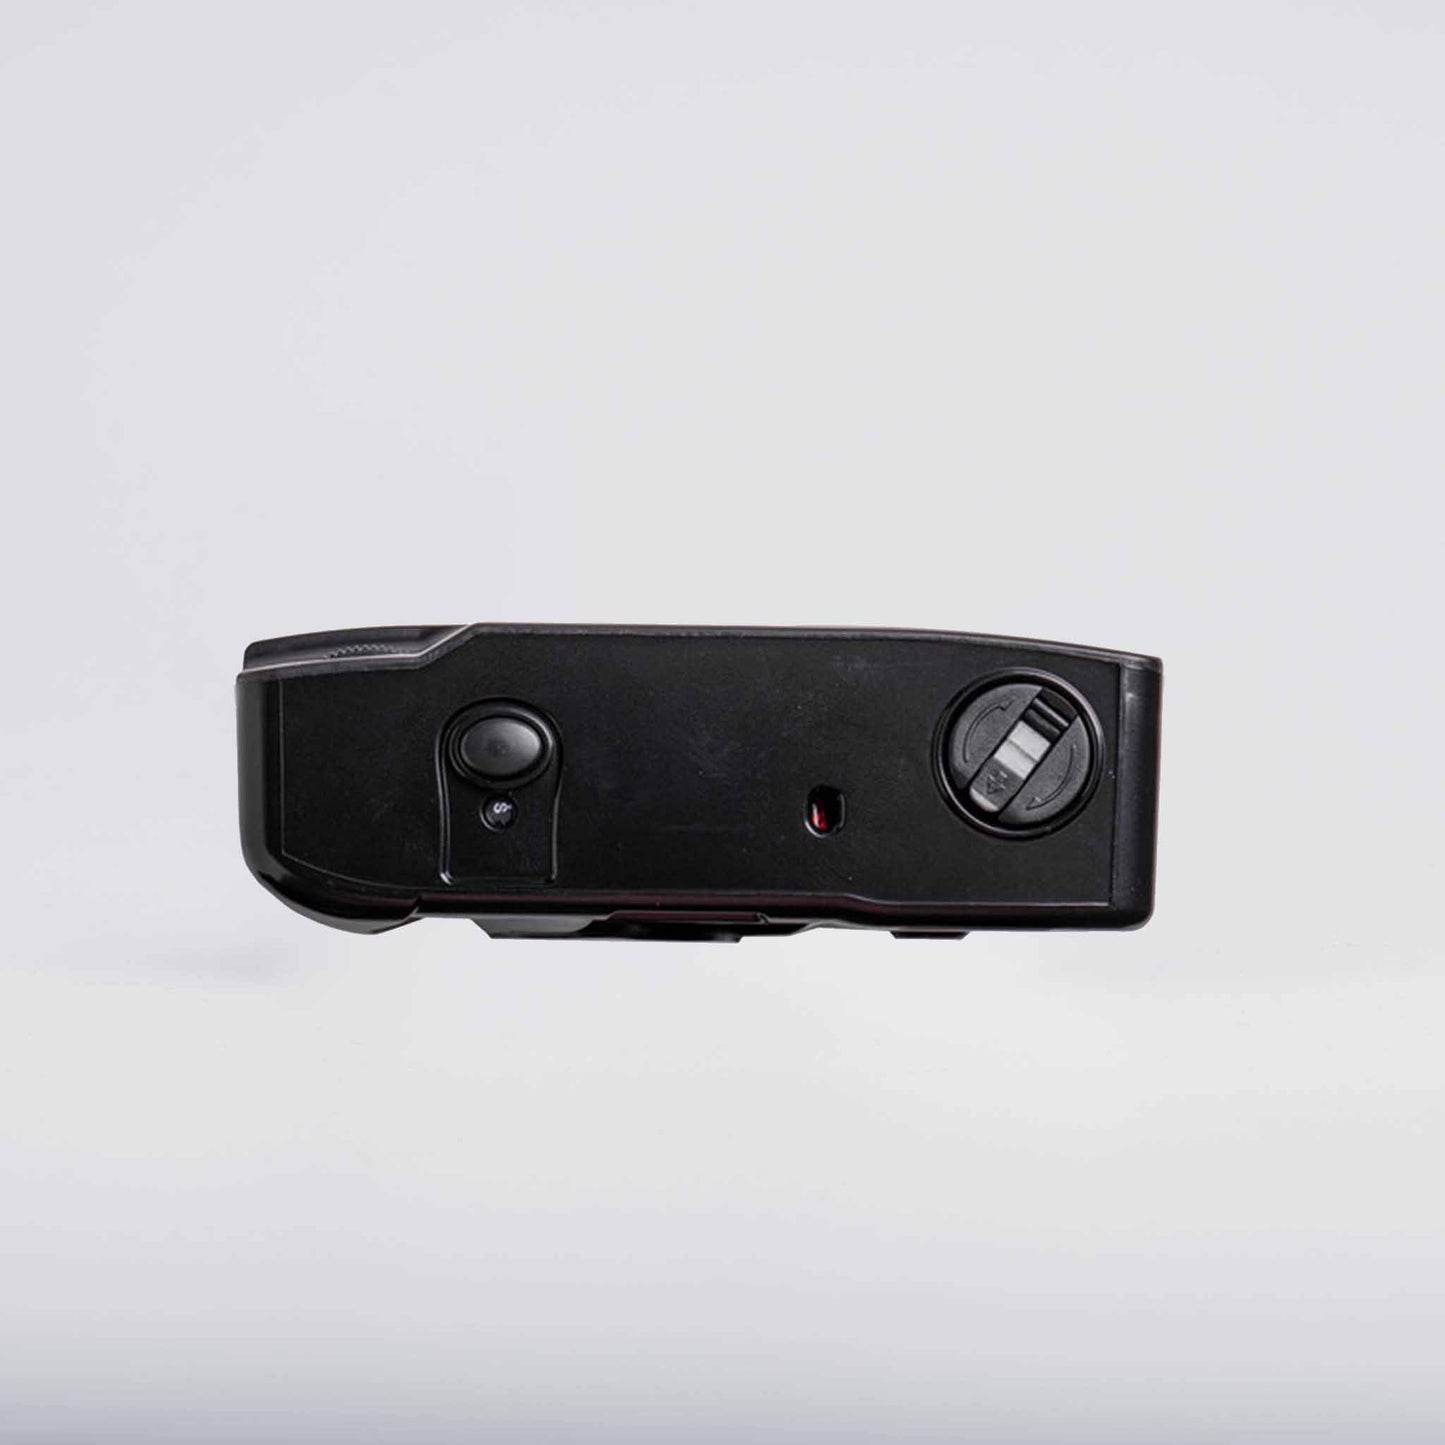 Kodak M38 Film Camera with Flash - Starry Black - Camera Kangaroo